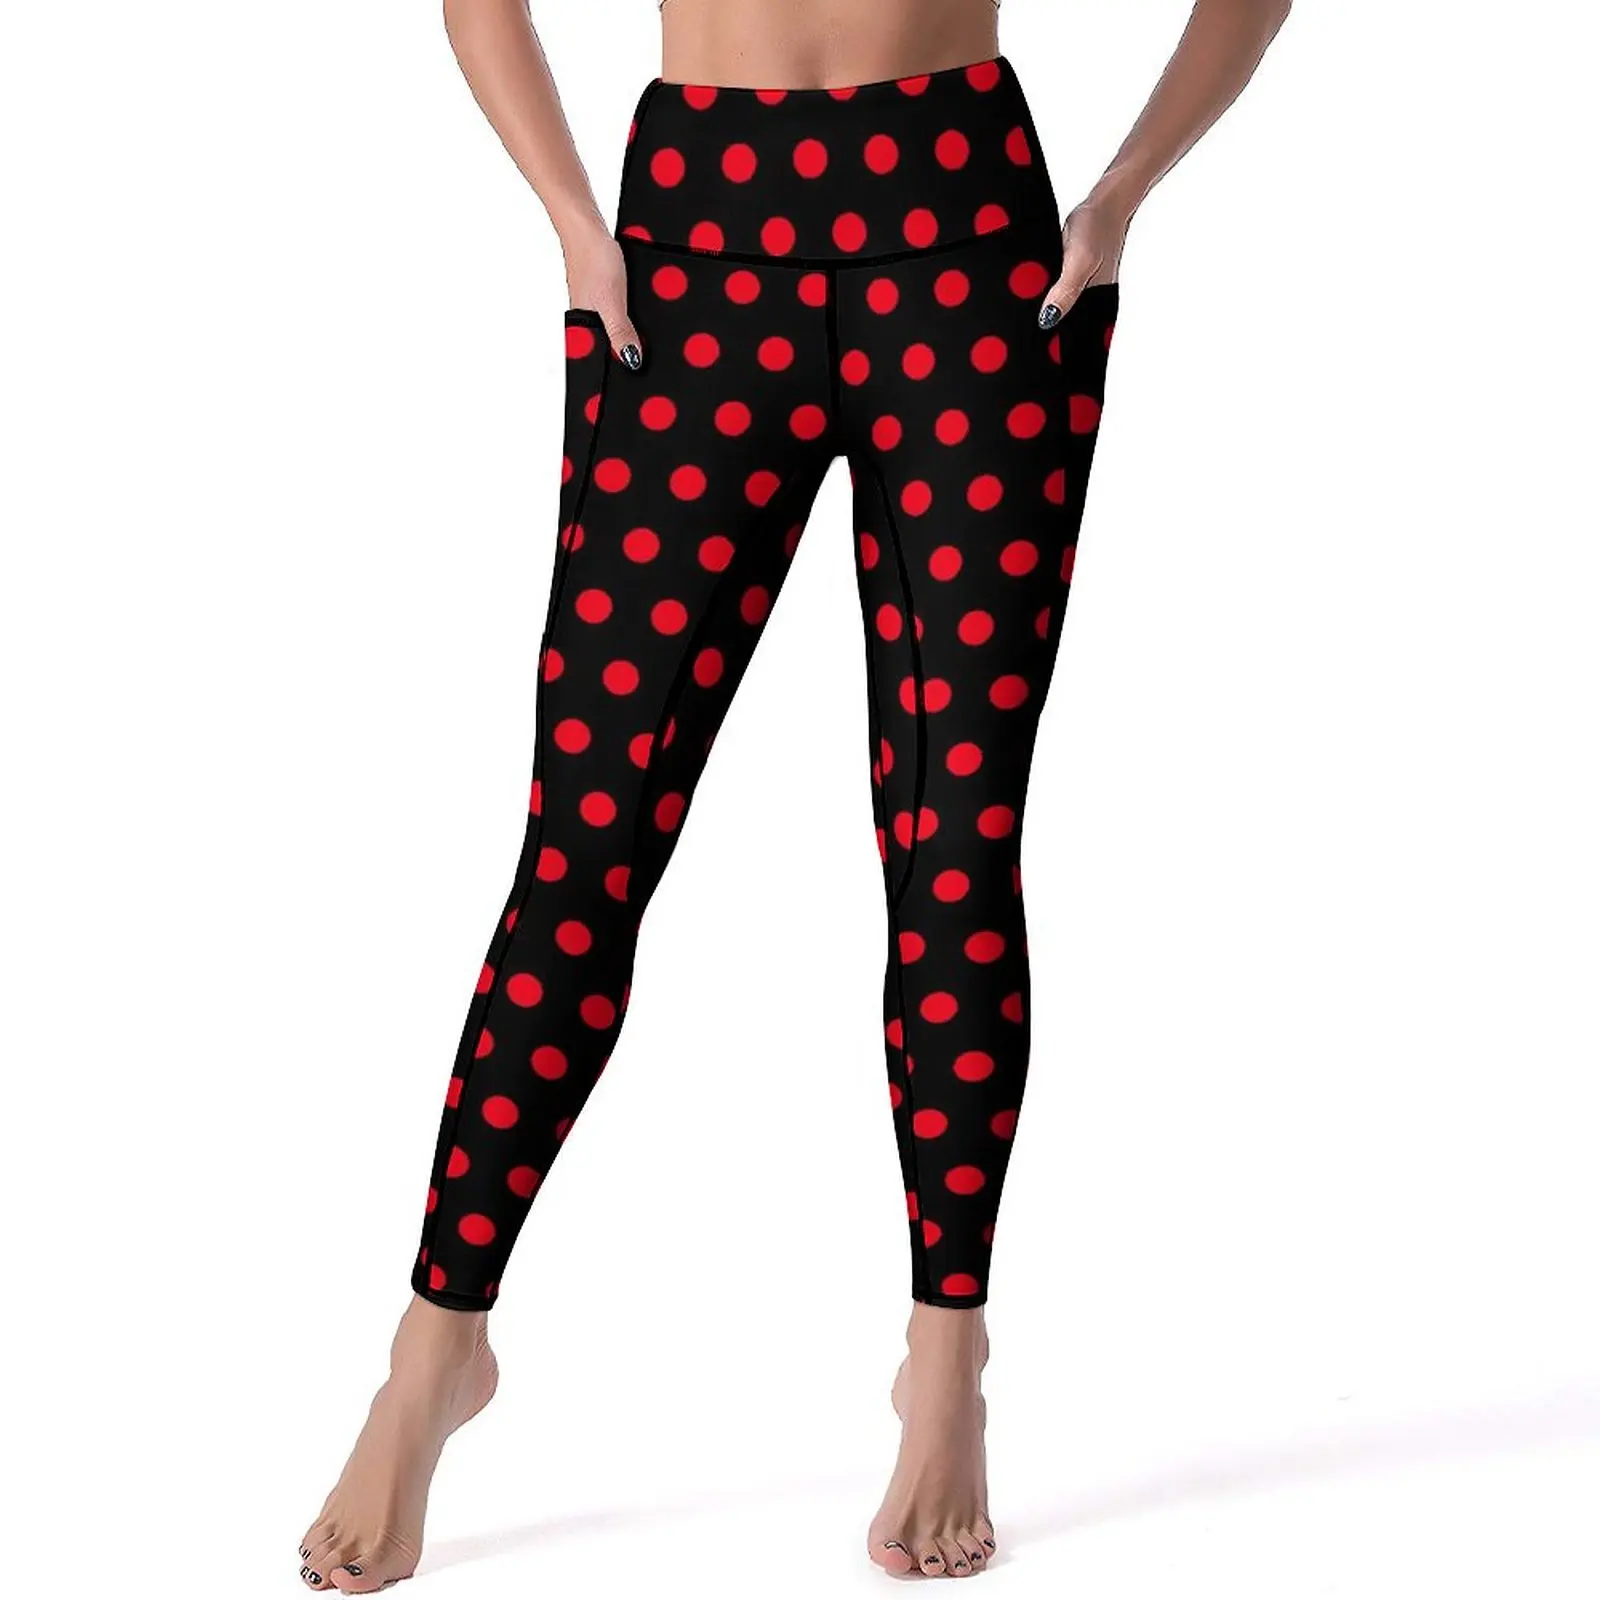 

Red Polka Dots Leggings Sexy Retro Print Fitness Yoga Pants Push Up Stretch Sport Legging Pockets Kawaii Design Leggins